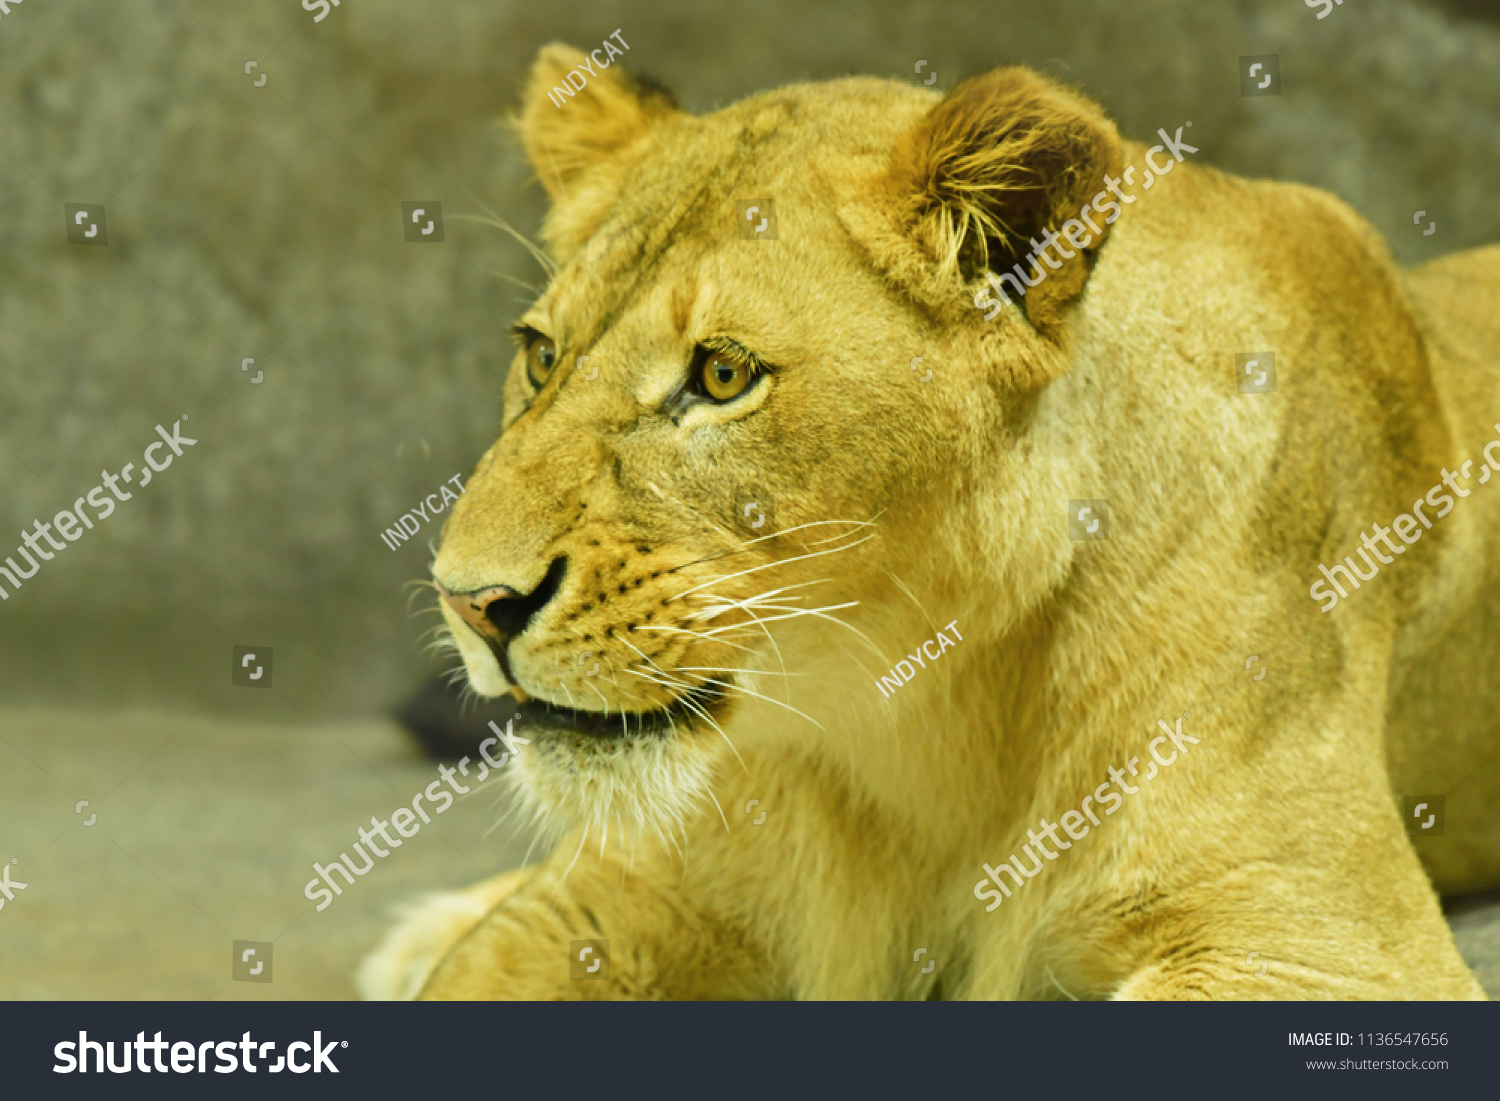 Close-up shot of roaring lion #1136547656